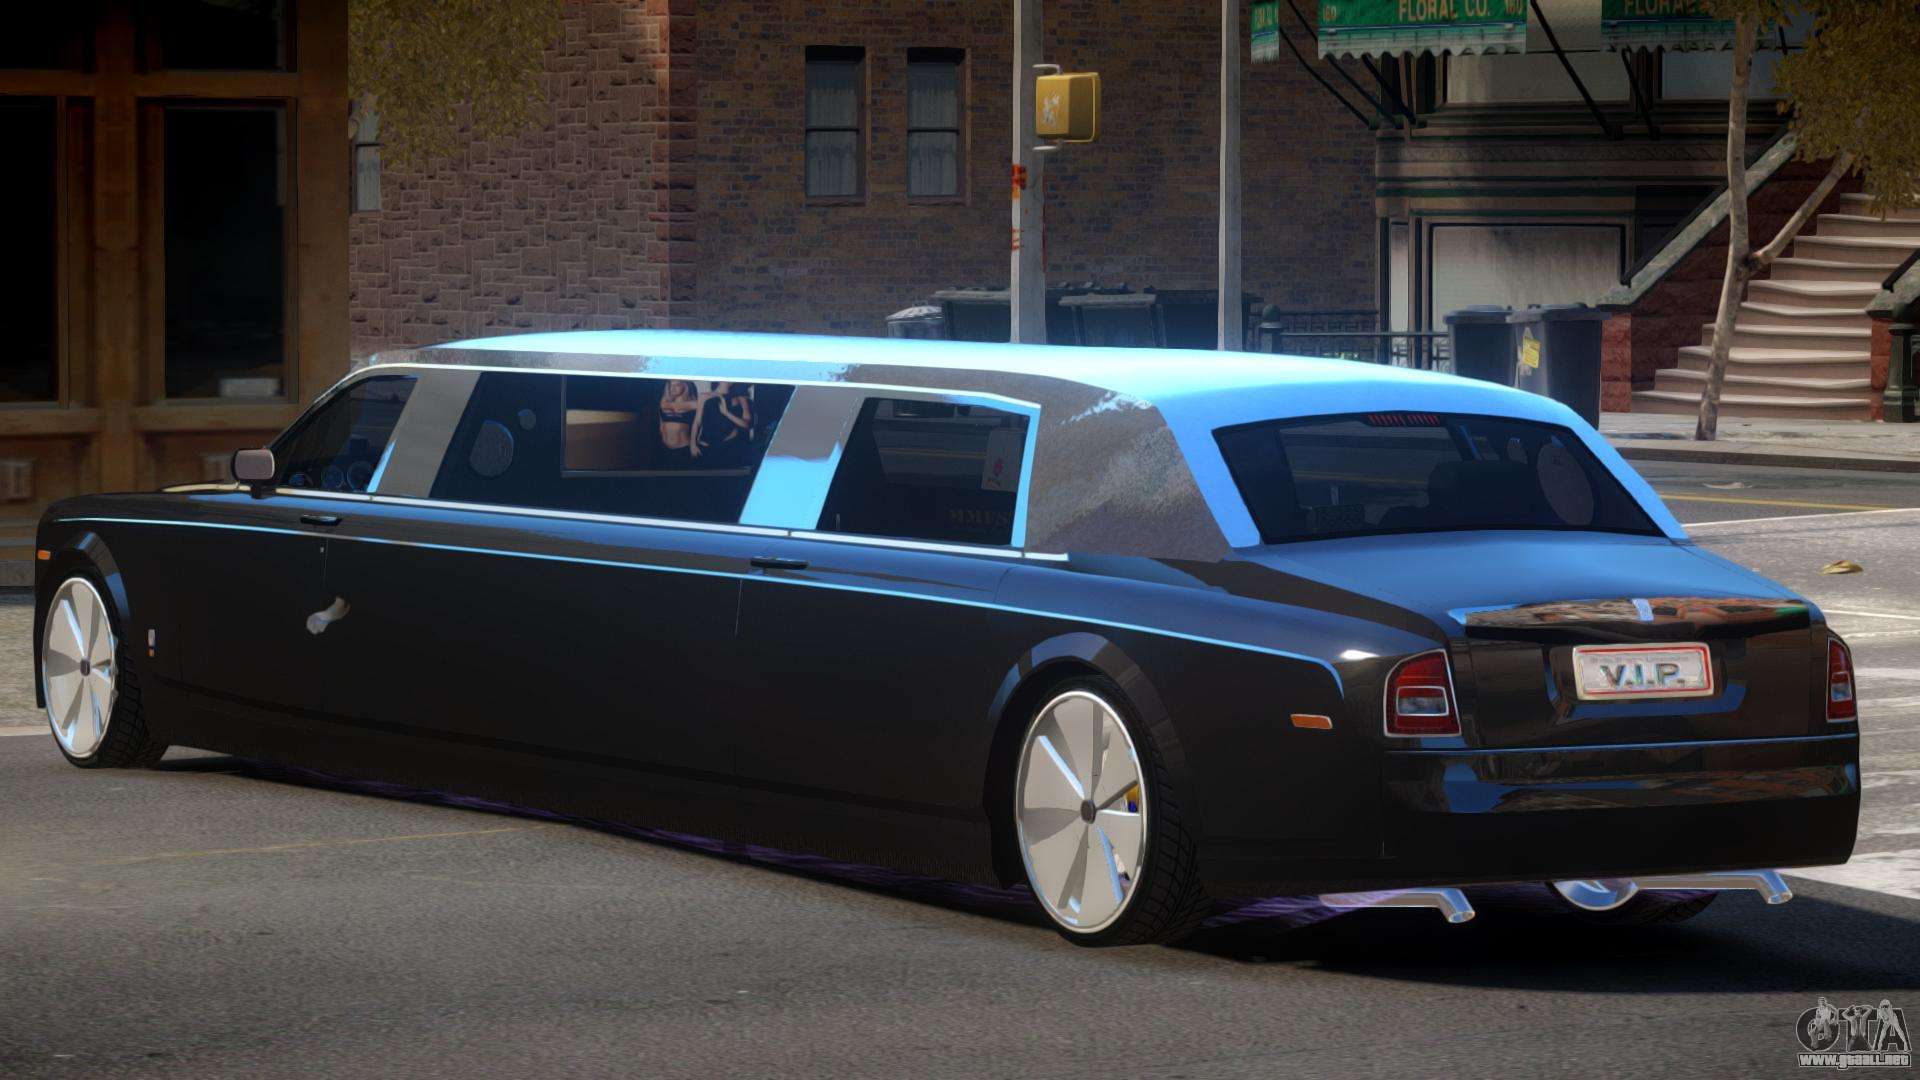 Rolls Royce Phantom Limo para GTA 4